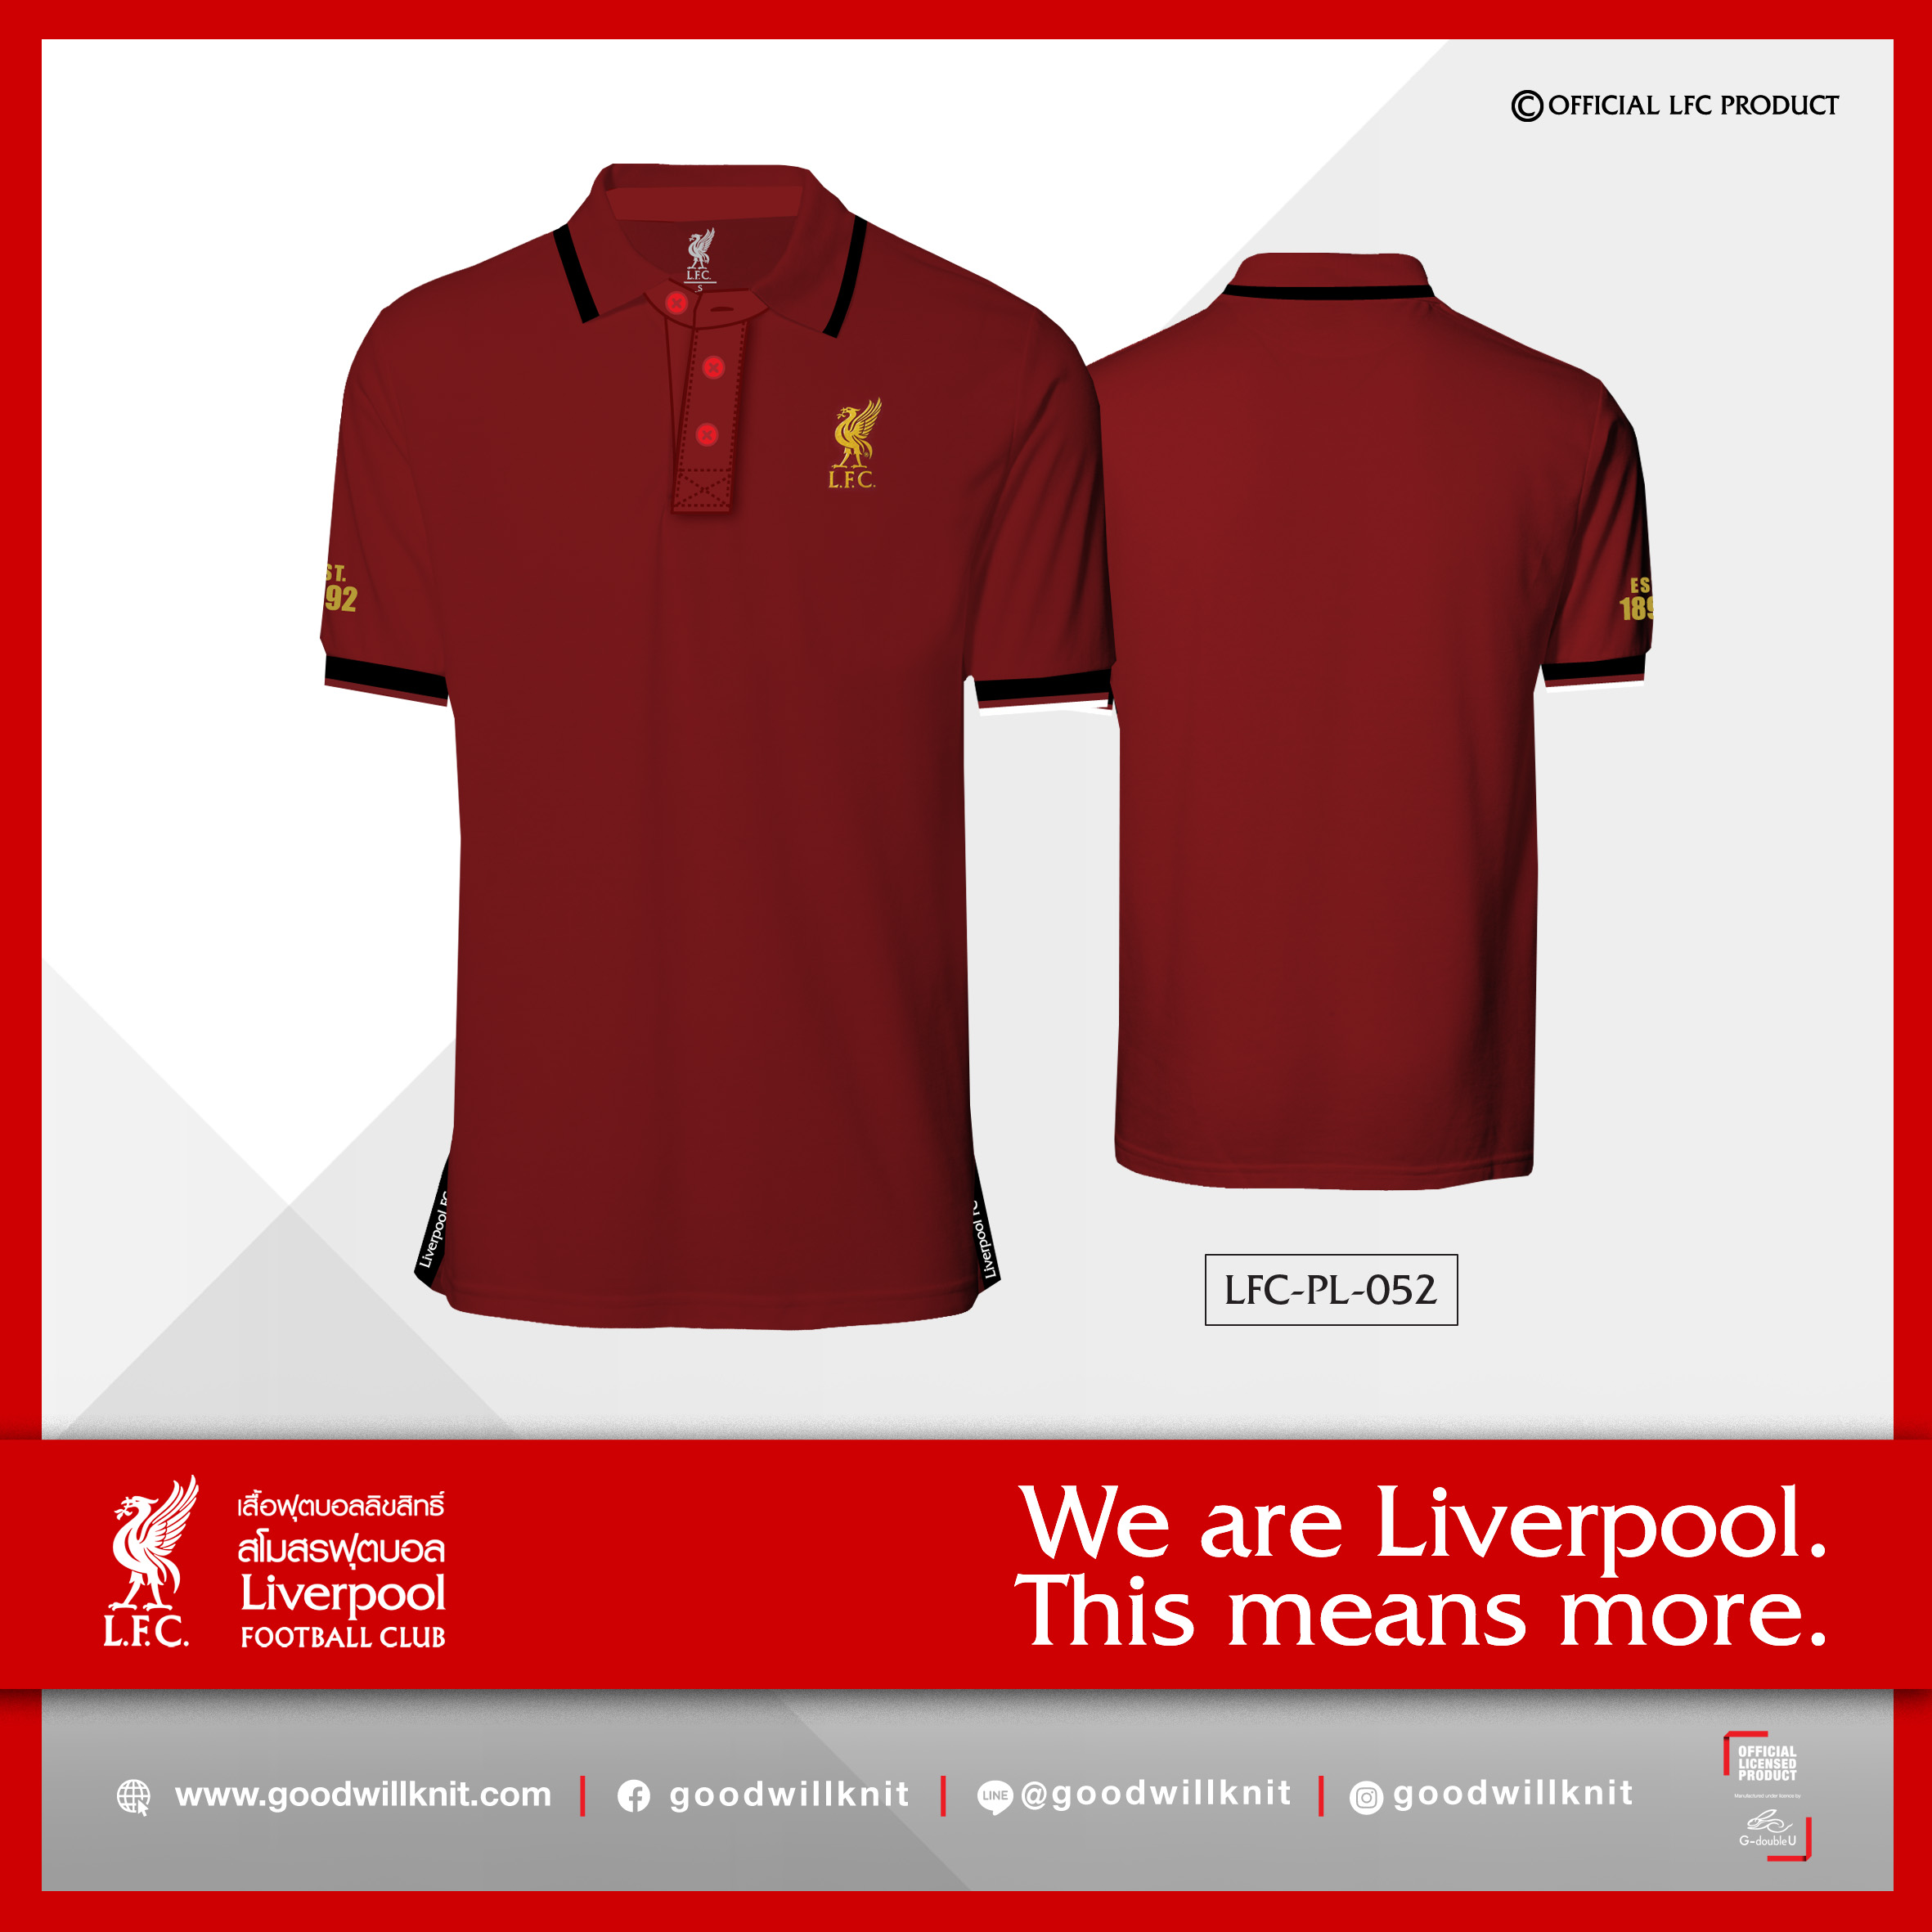 Goodwillknit Liverpool เสื้อลิเวอร์พูล เสื้อโปโล ลิเวอร์พูล ลิขสิทธิ์ C052 มี 3 สี